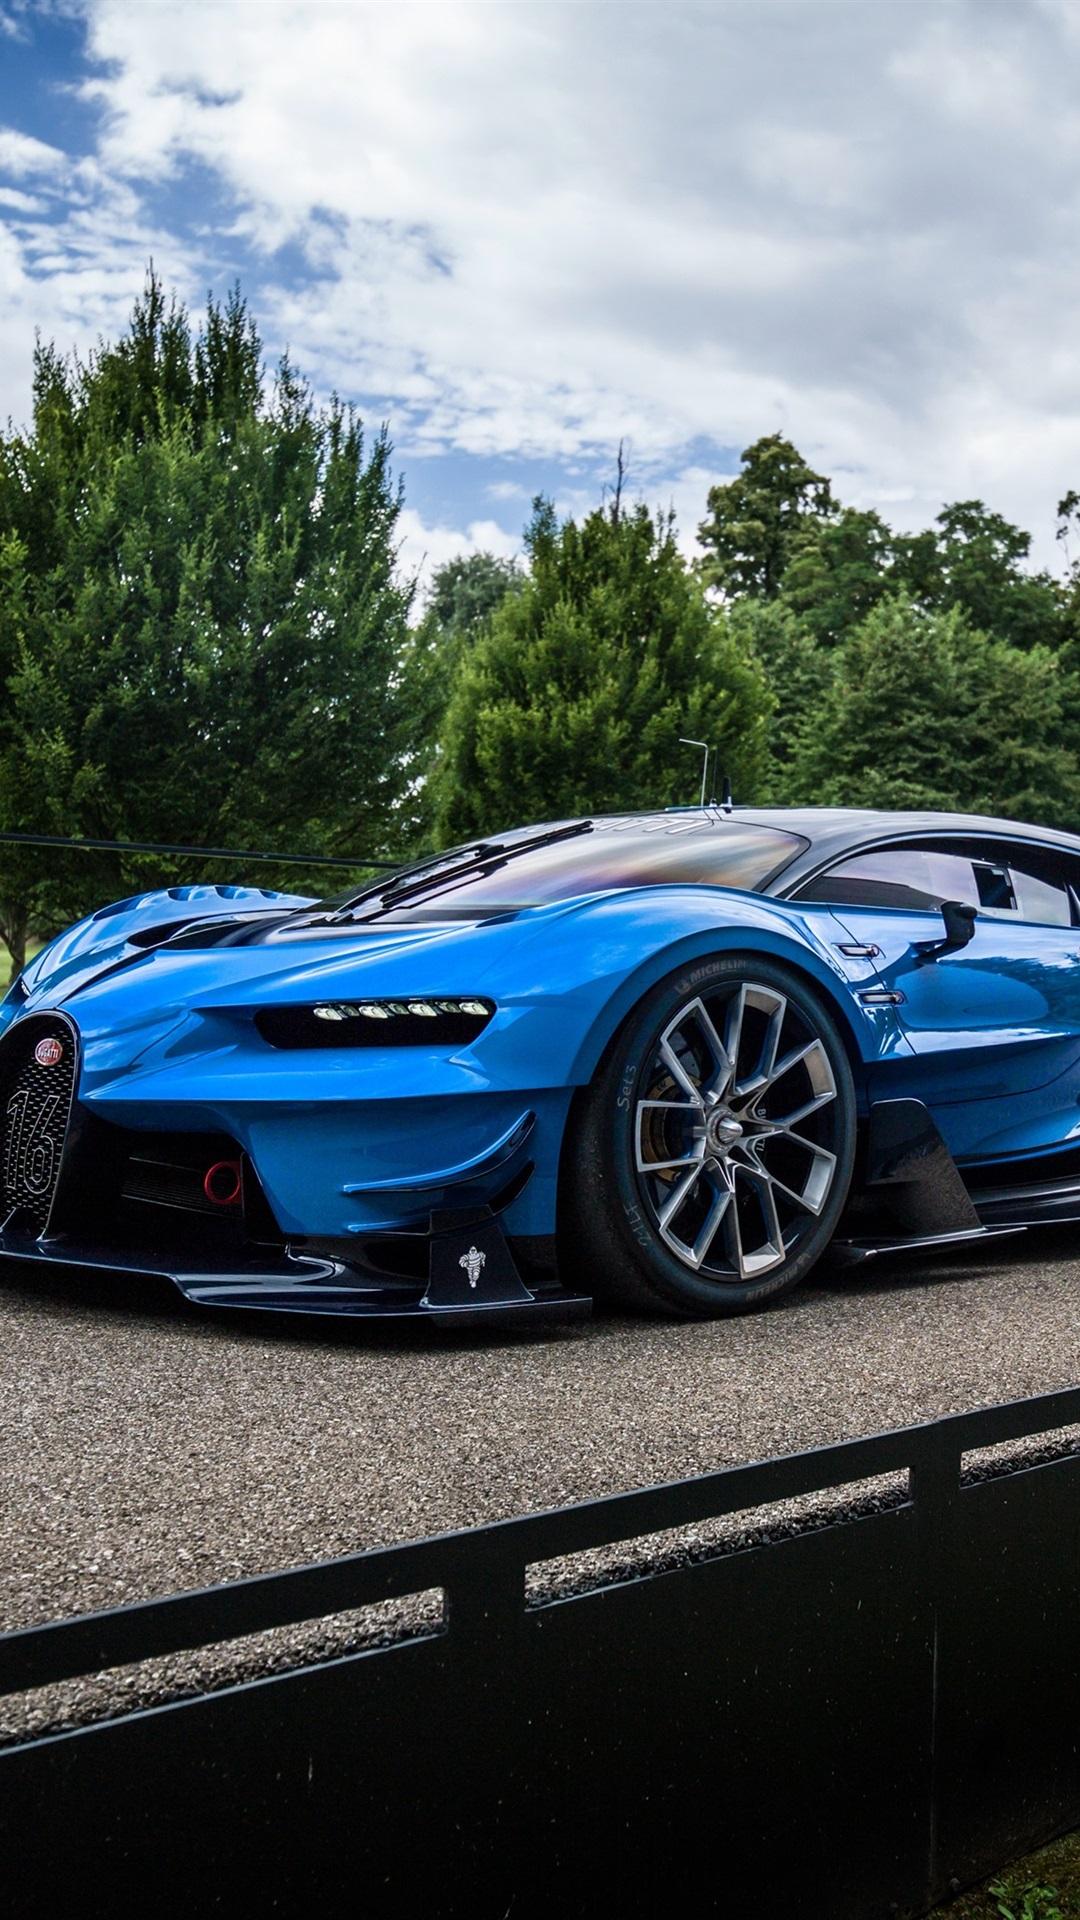 Bugatti Vision Gran Turismo blue hypercar, road, clouds